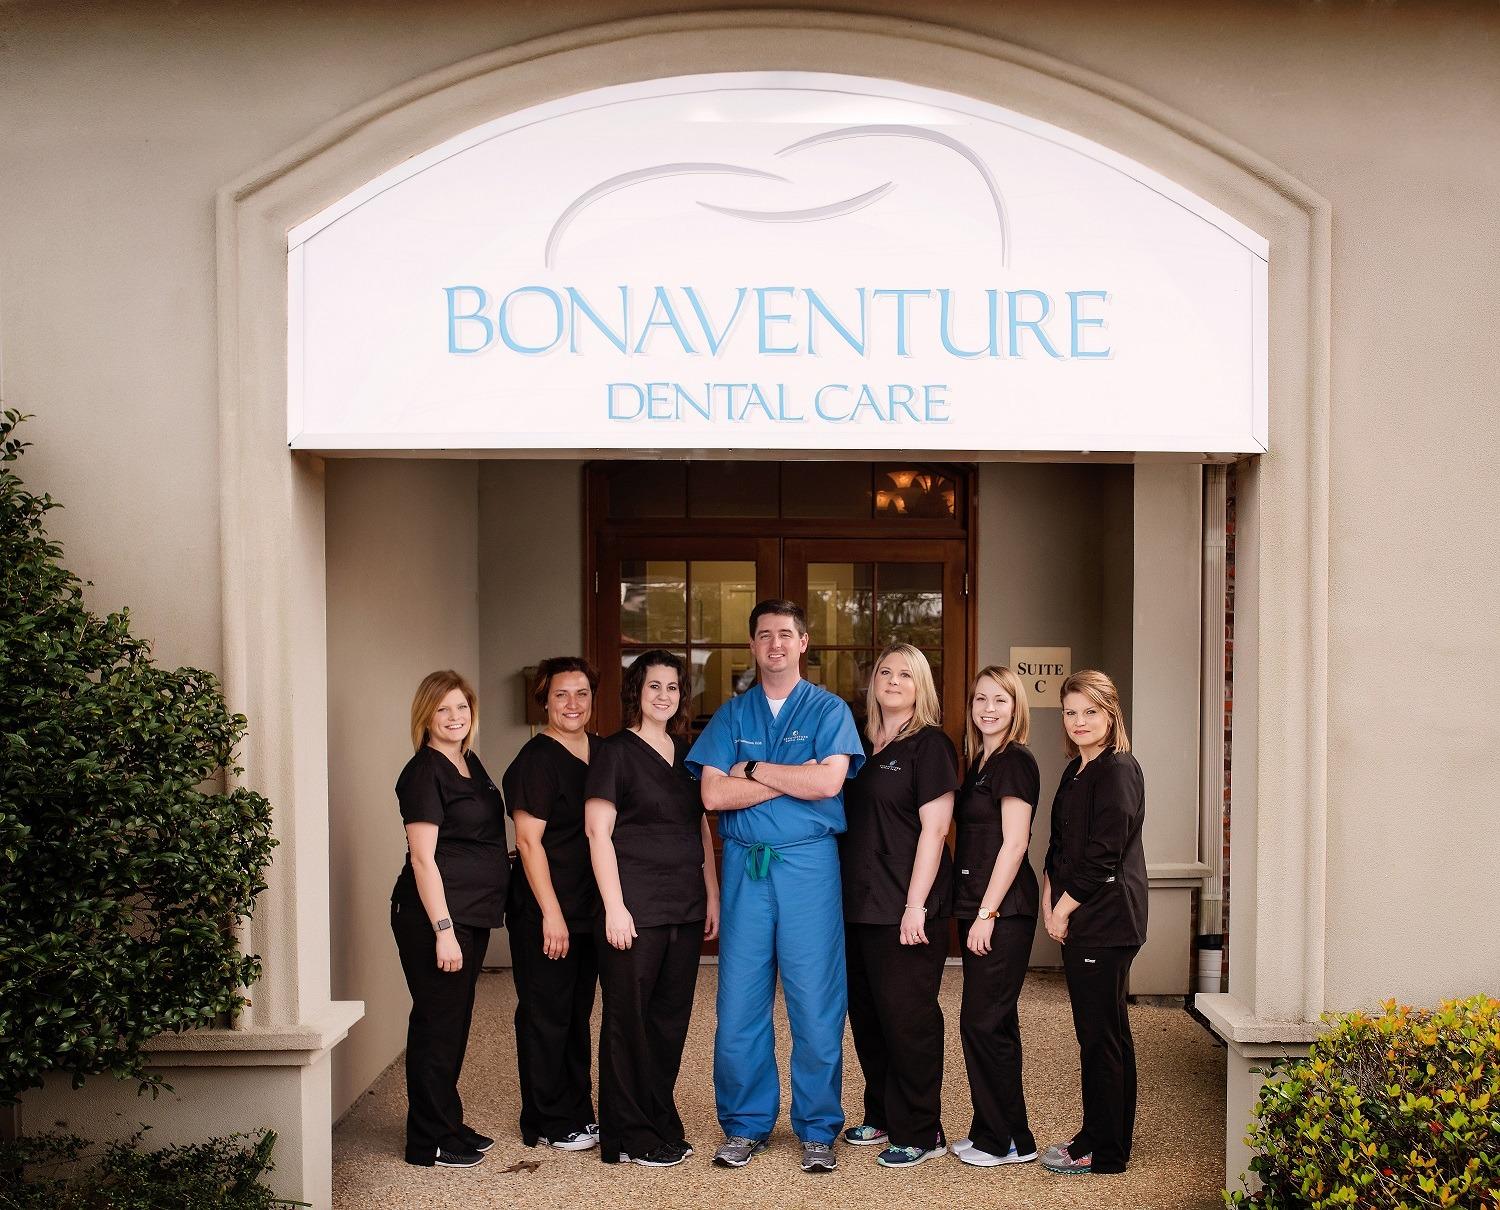 Bonaventure Dental Care Photo